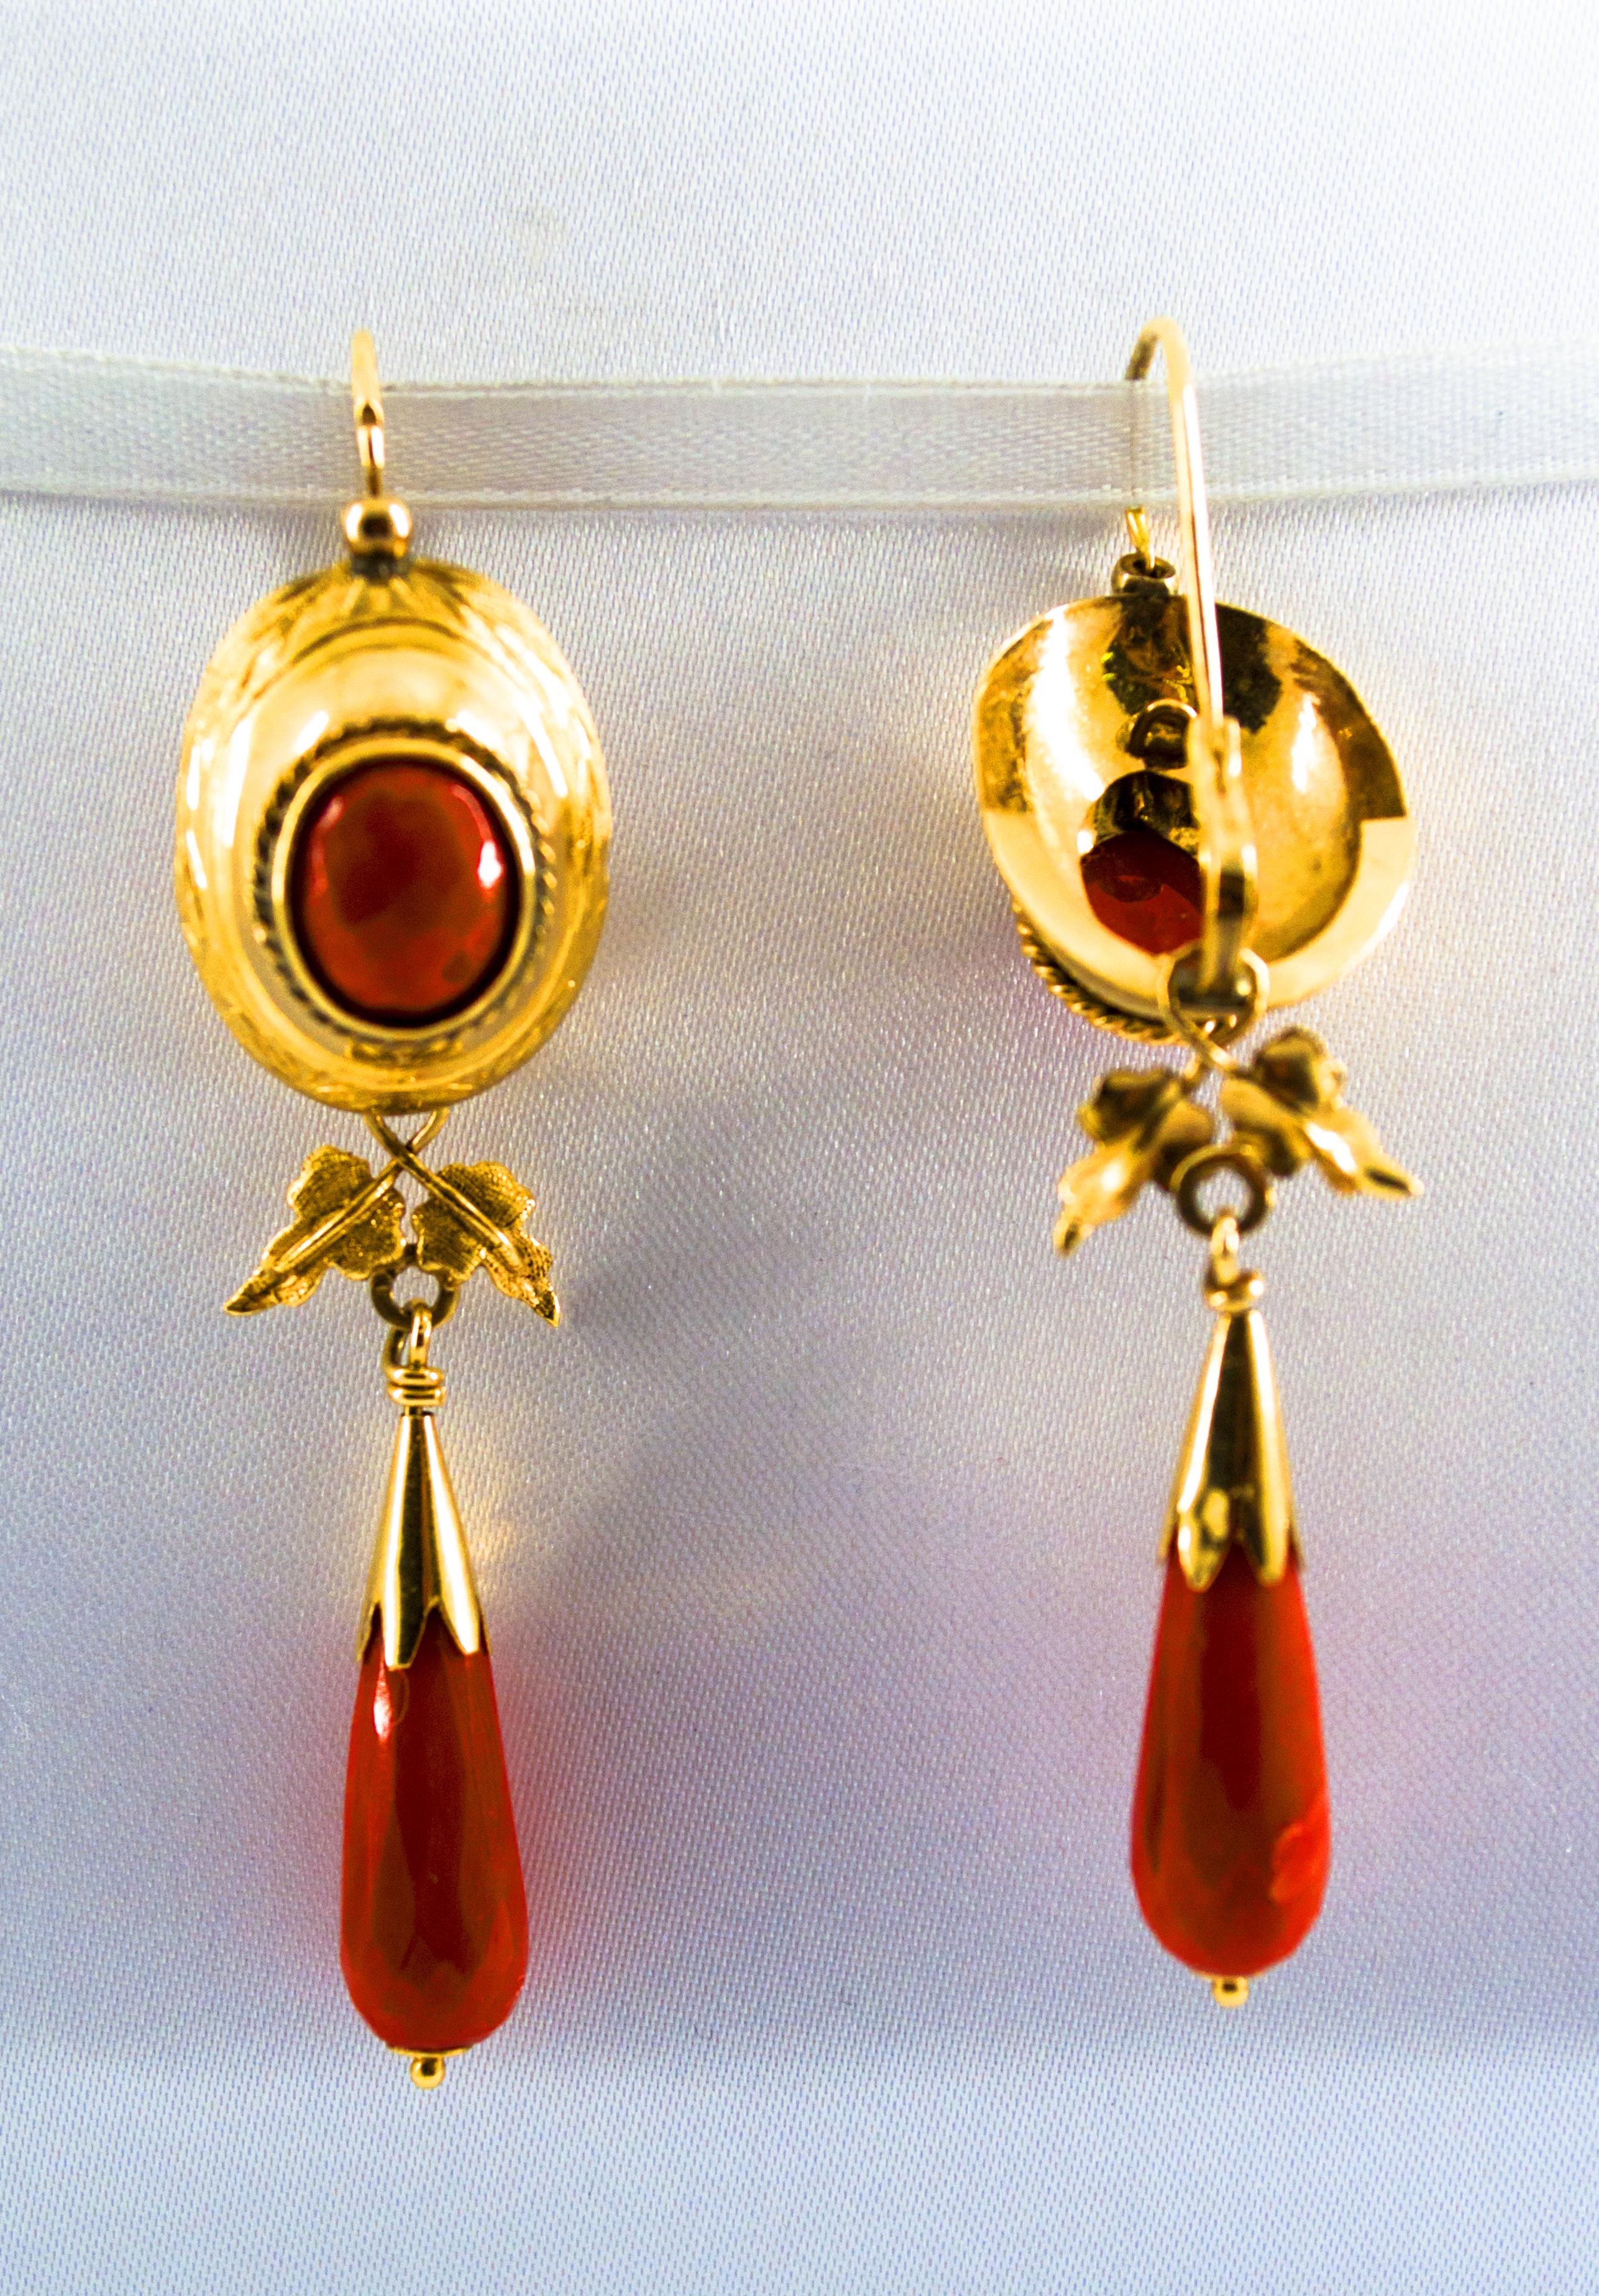 renaissance style earrings